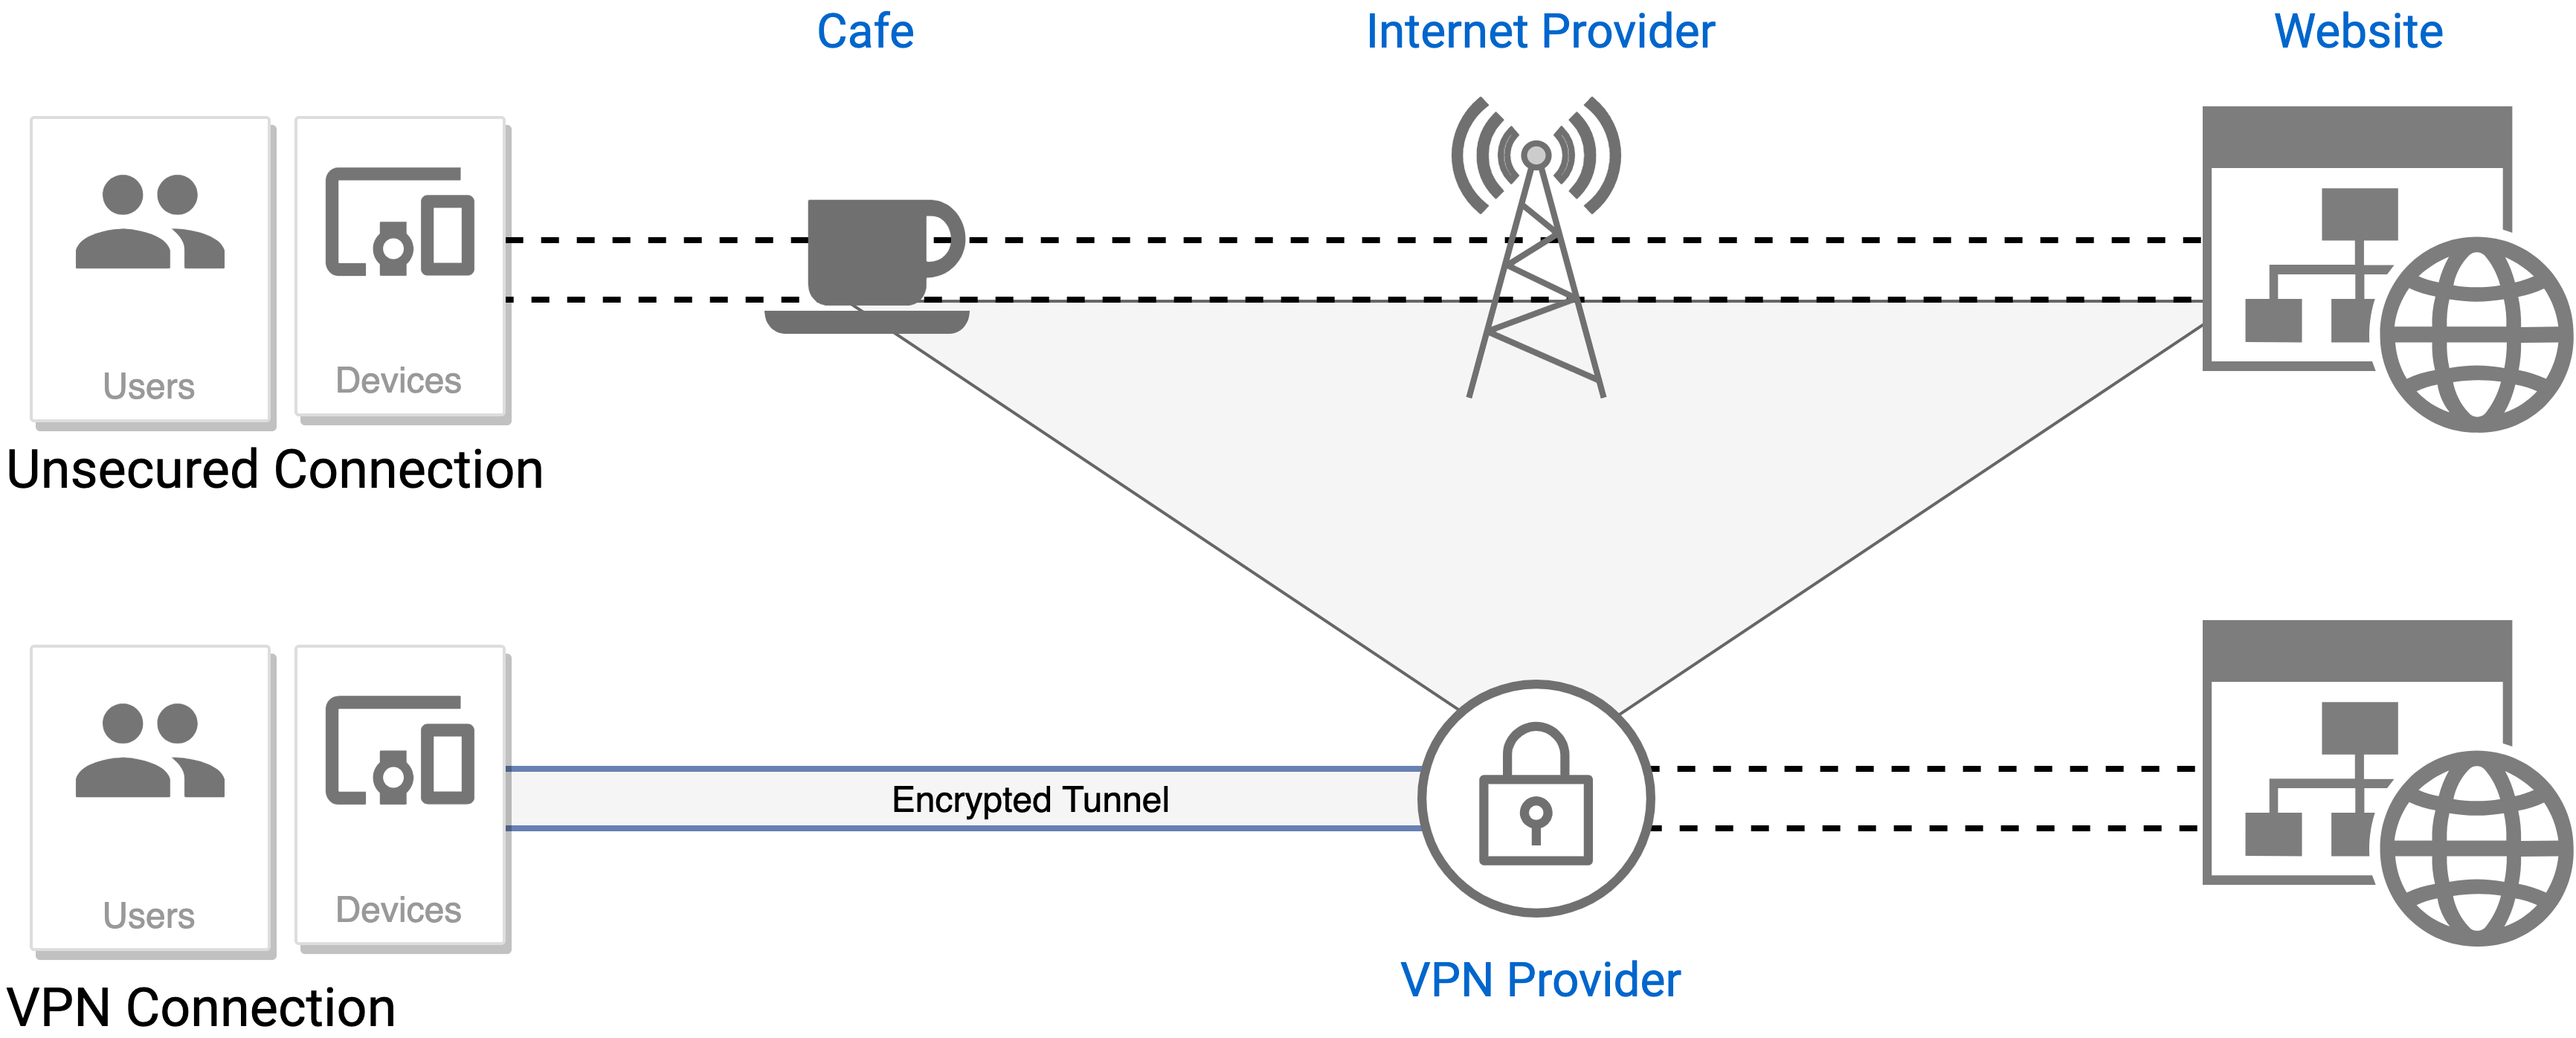 Can banks detect VPN?